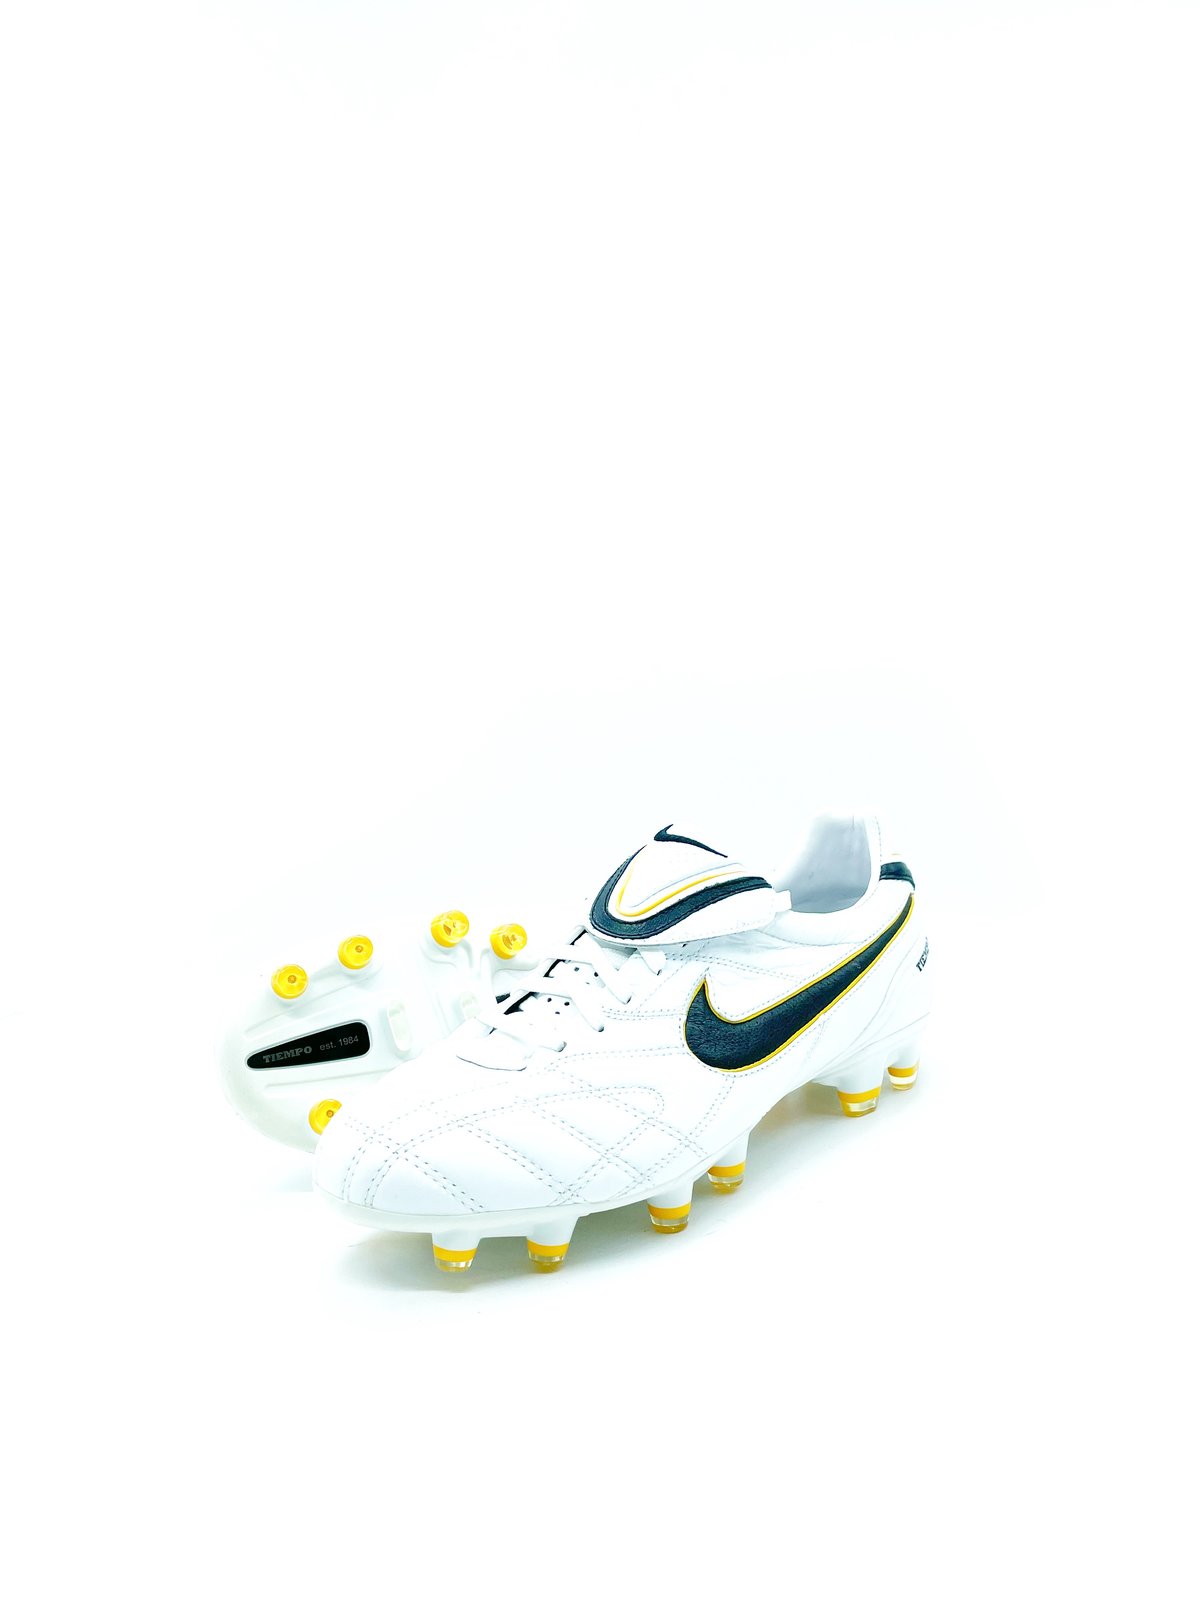 Tbtclassicfootballboots — Nike Tiempo III FG White